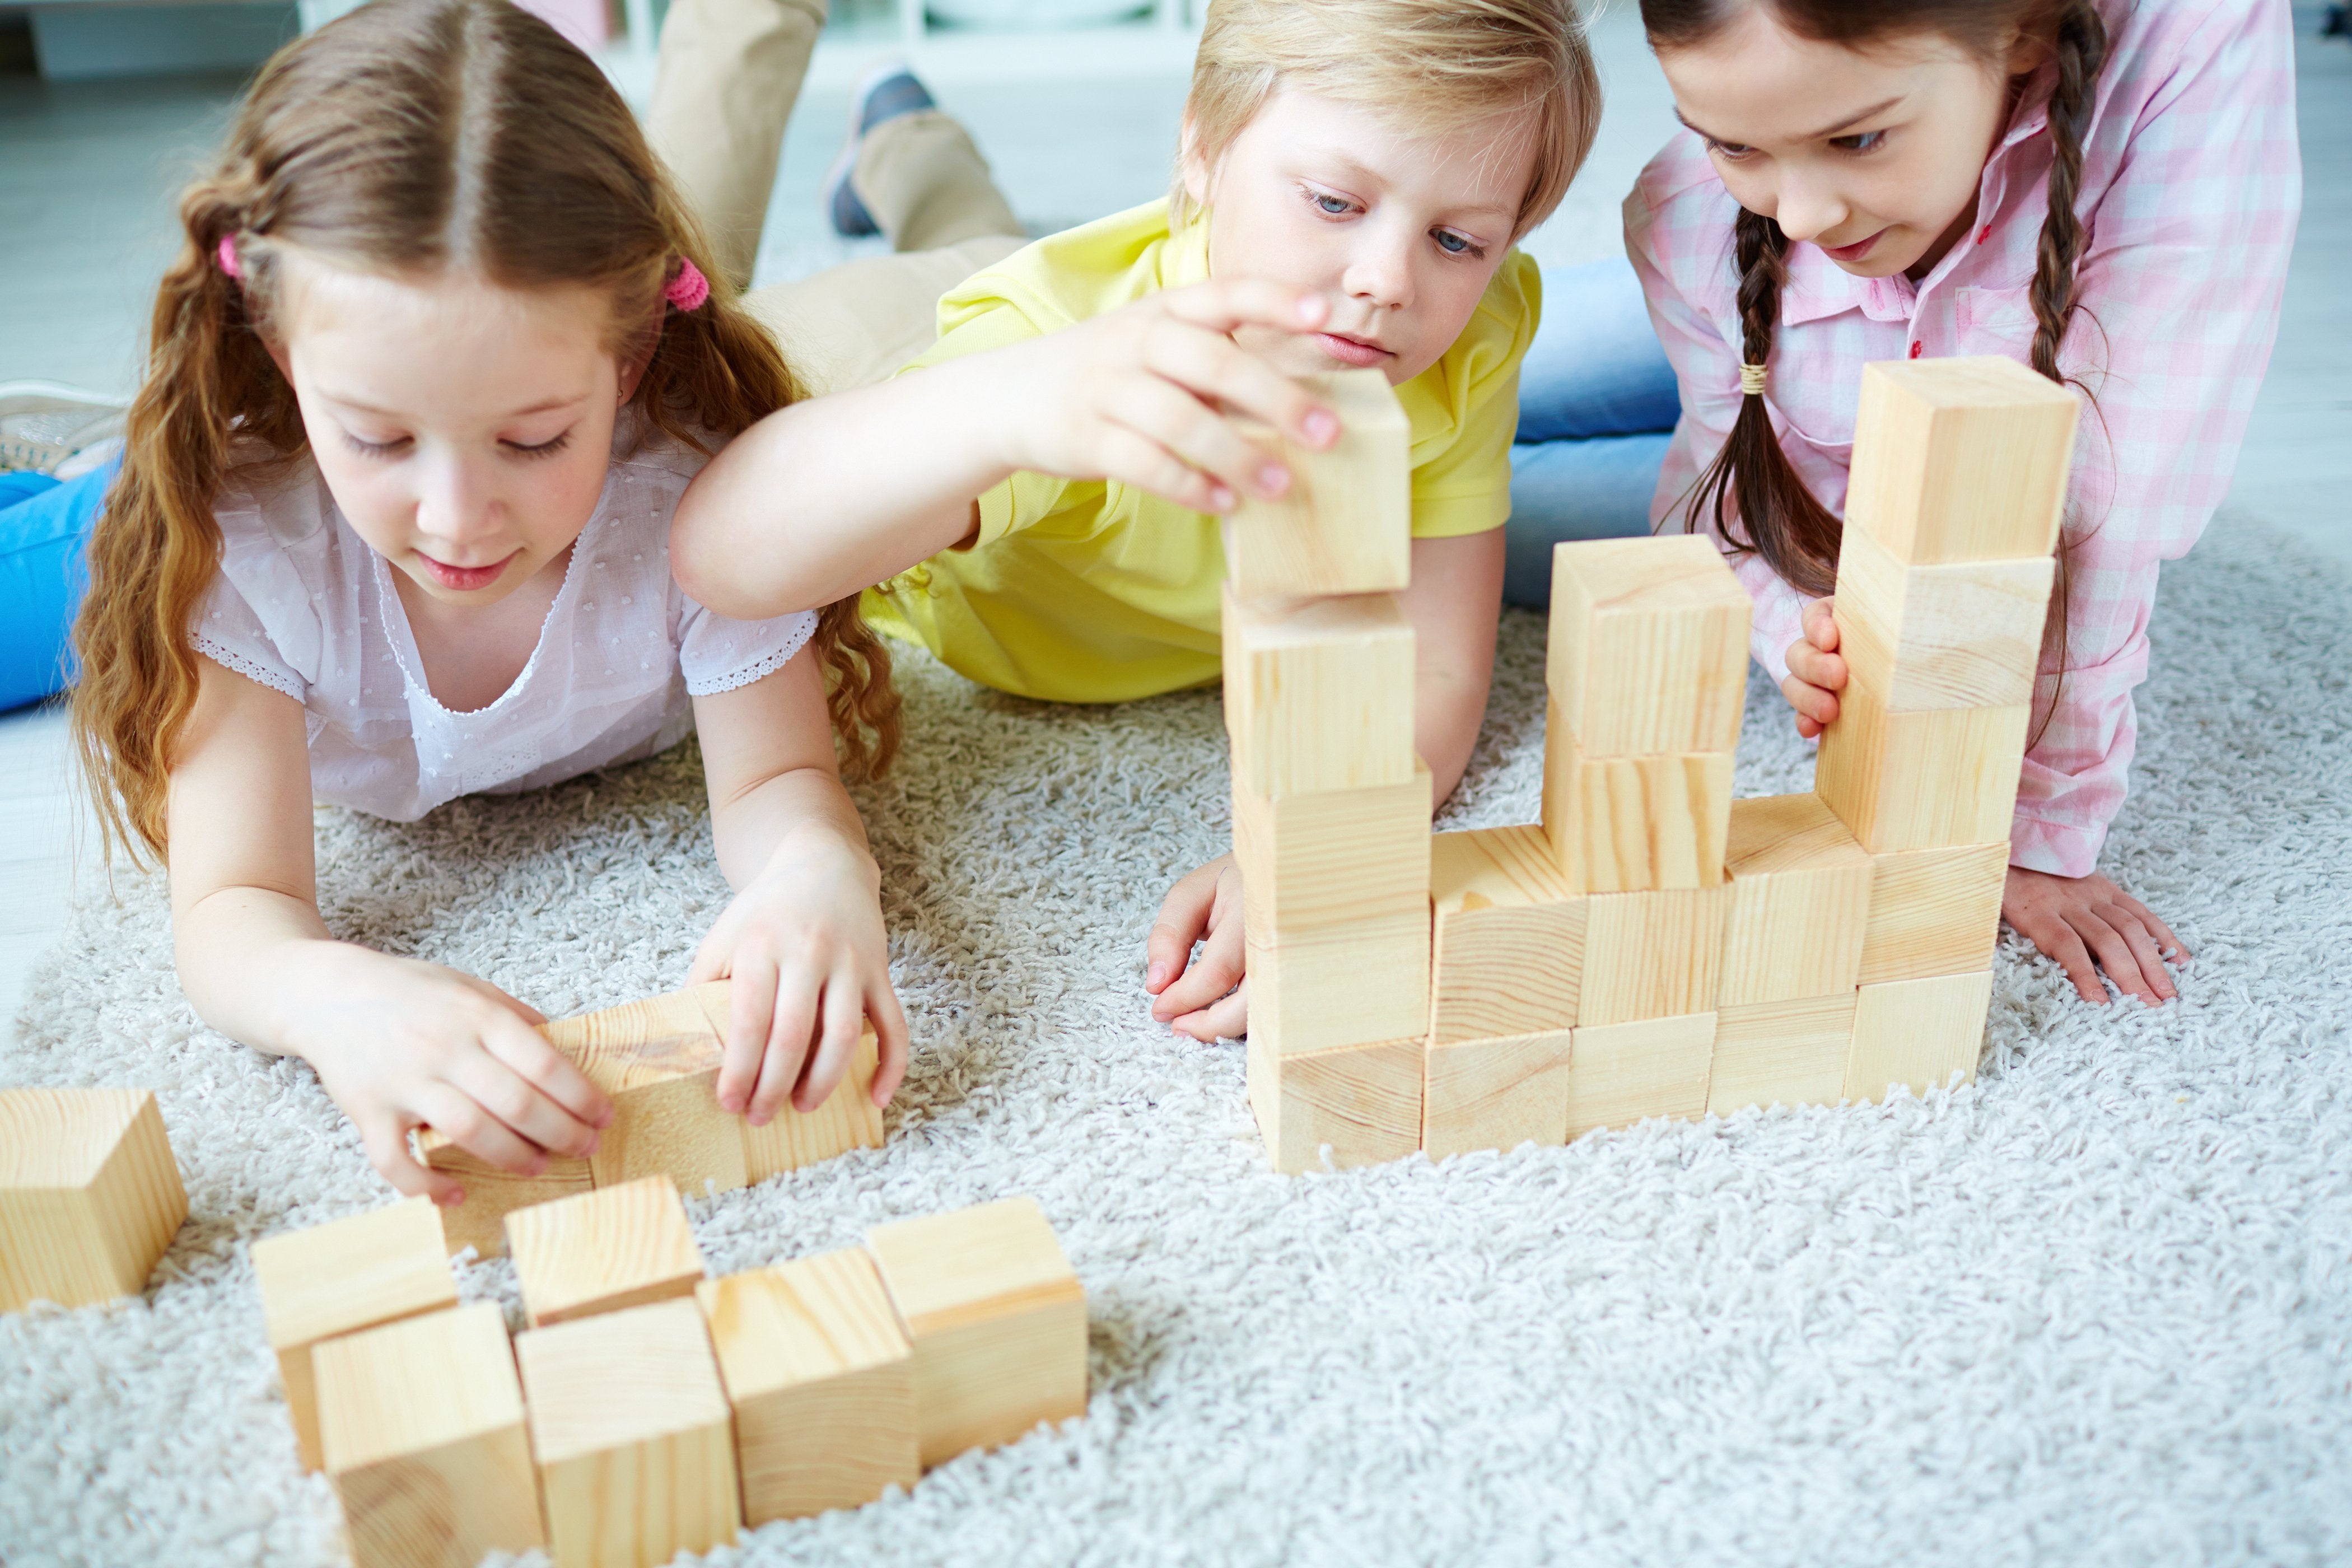 Kids Building Blocks